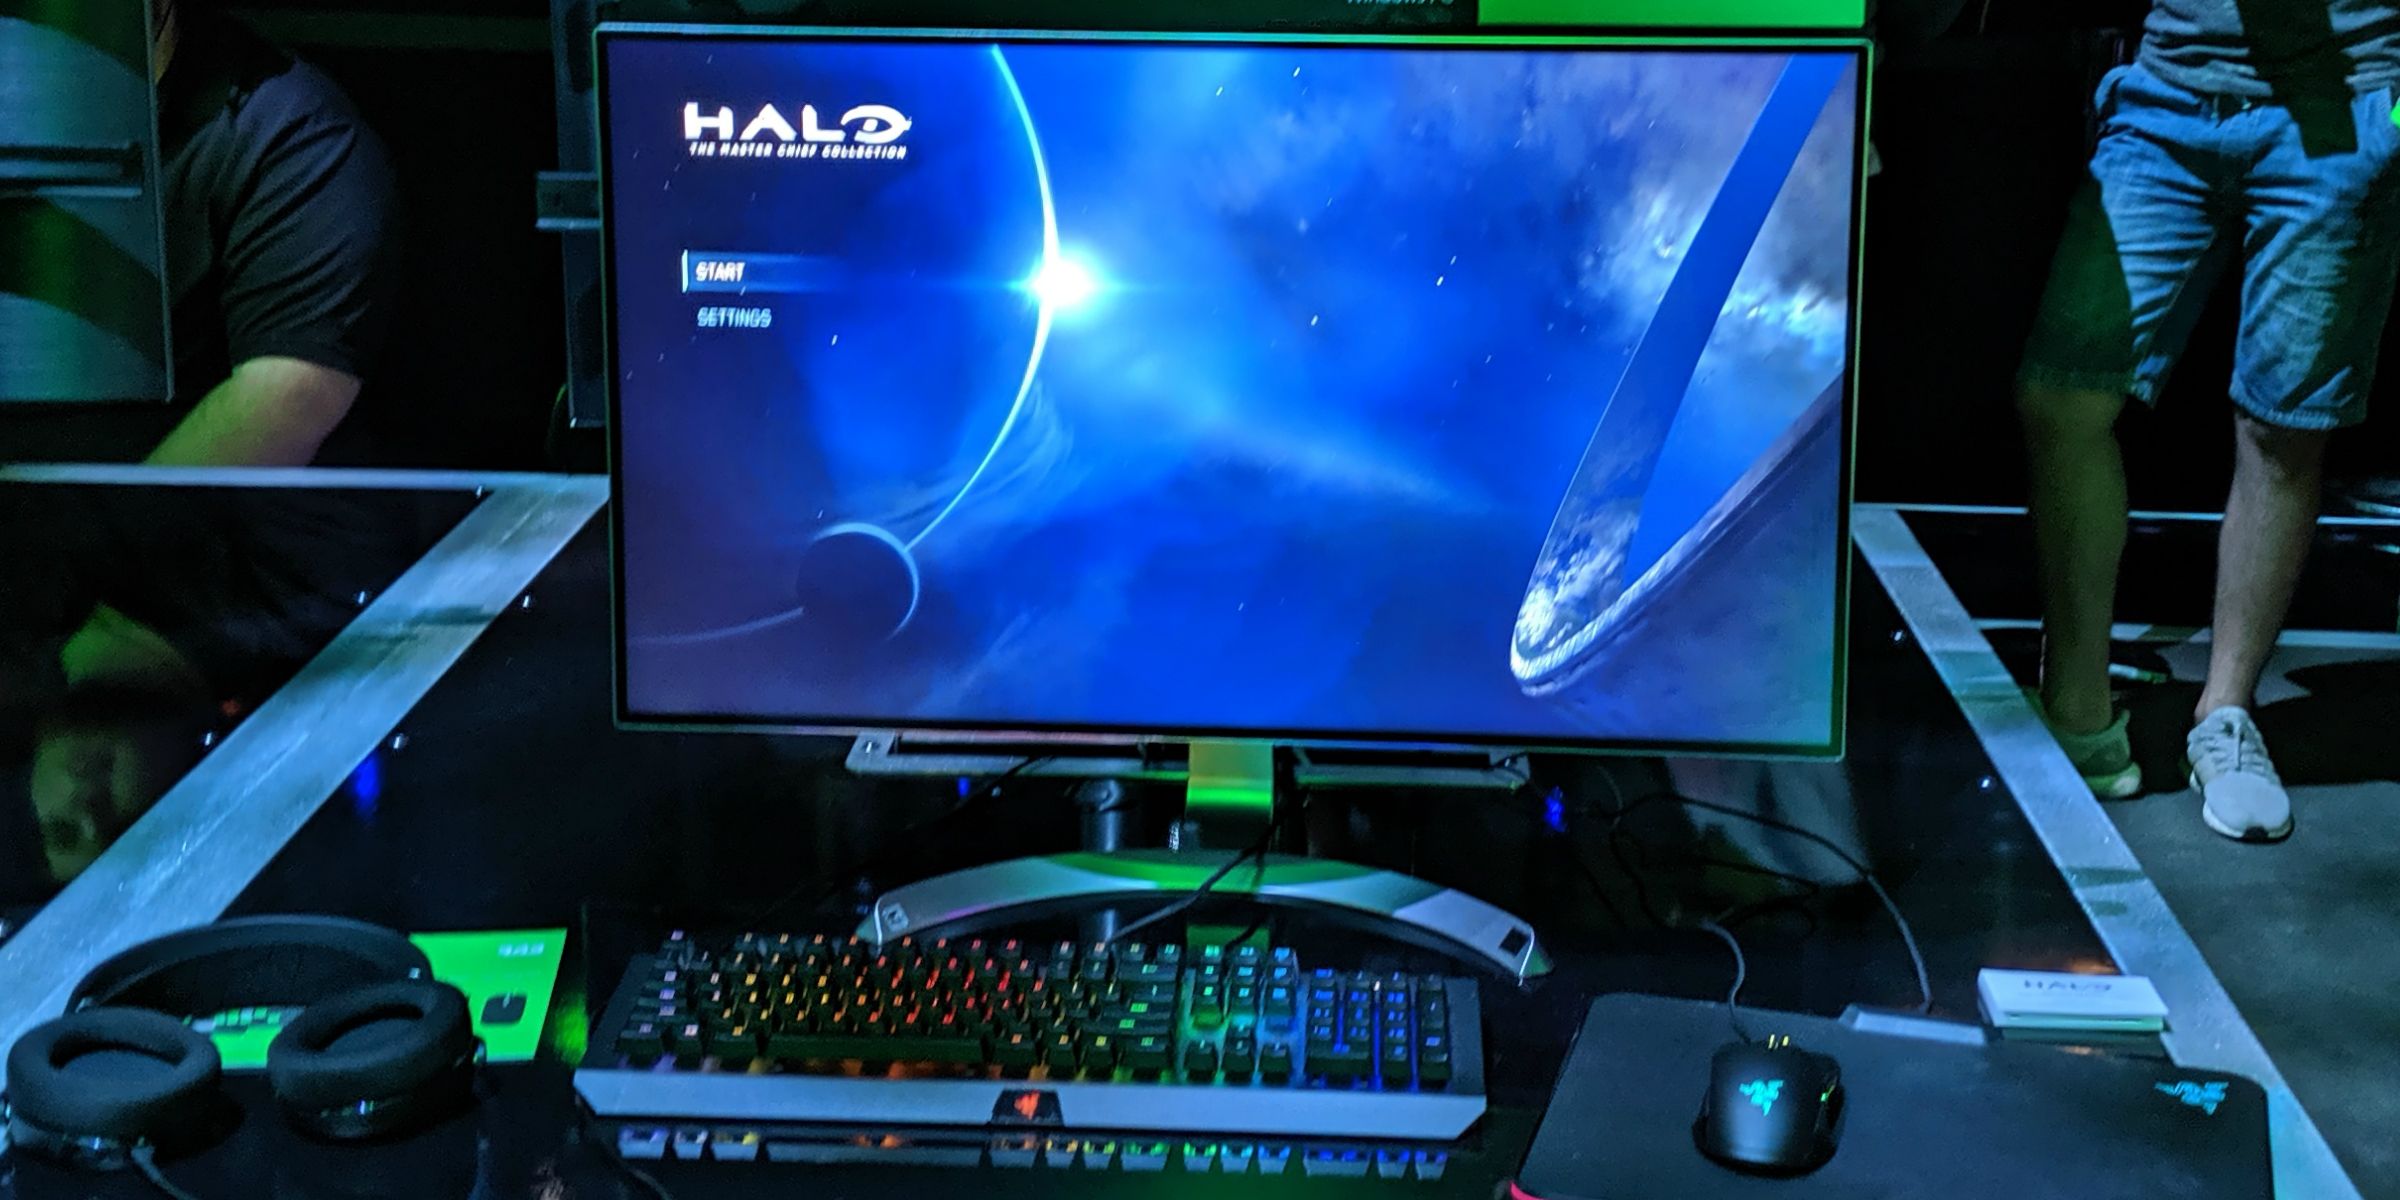 Halo Reach on PC